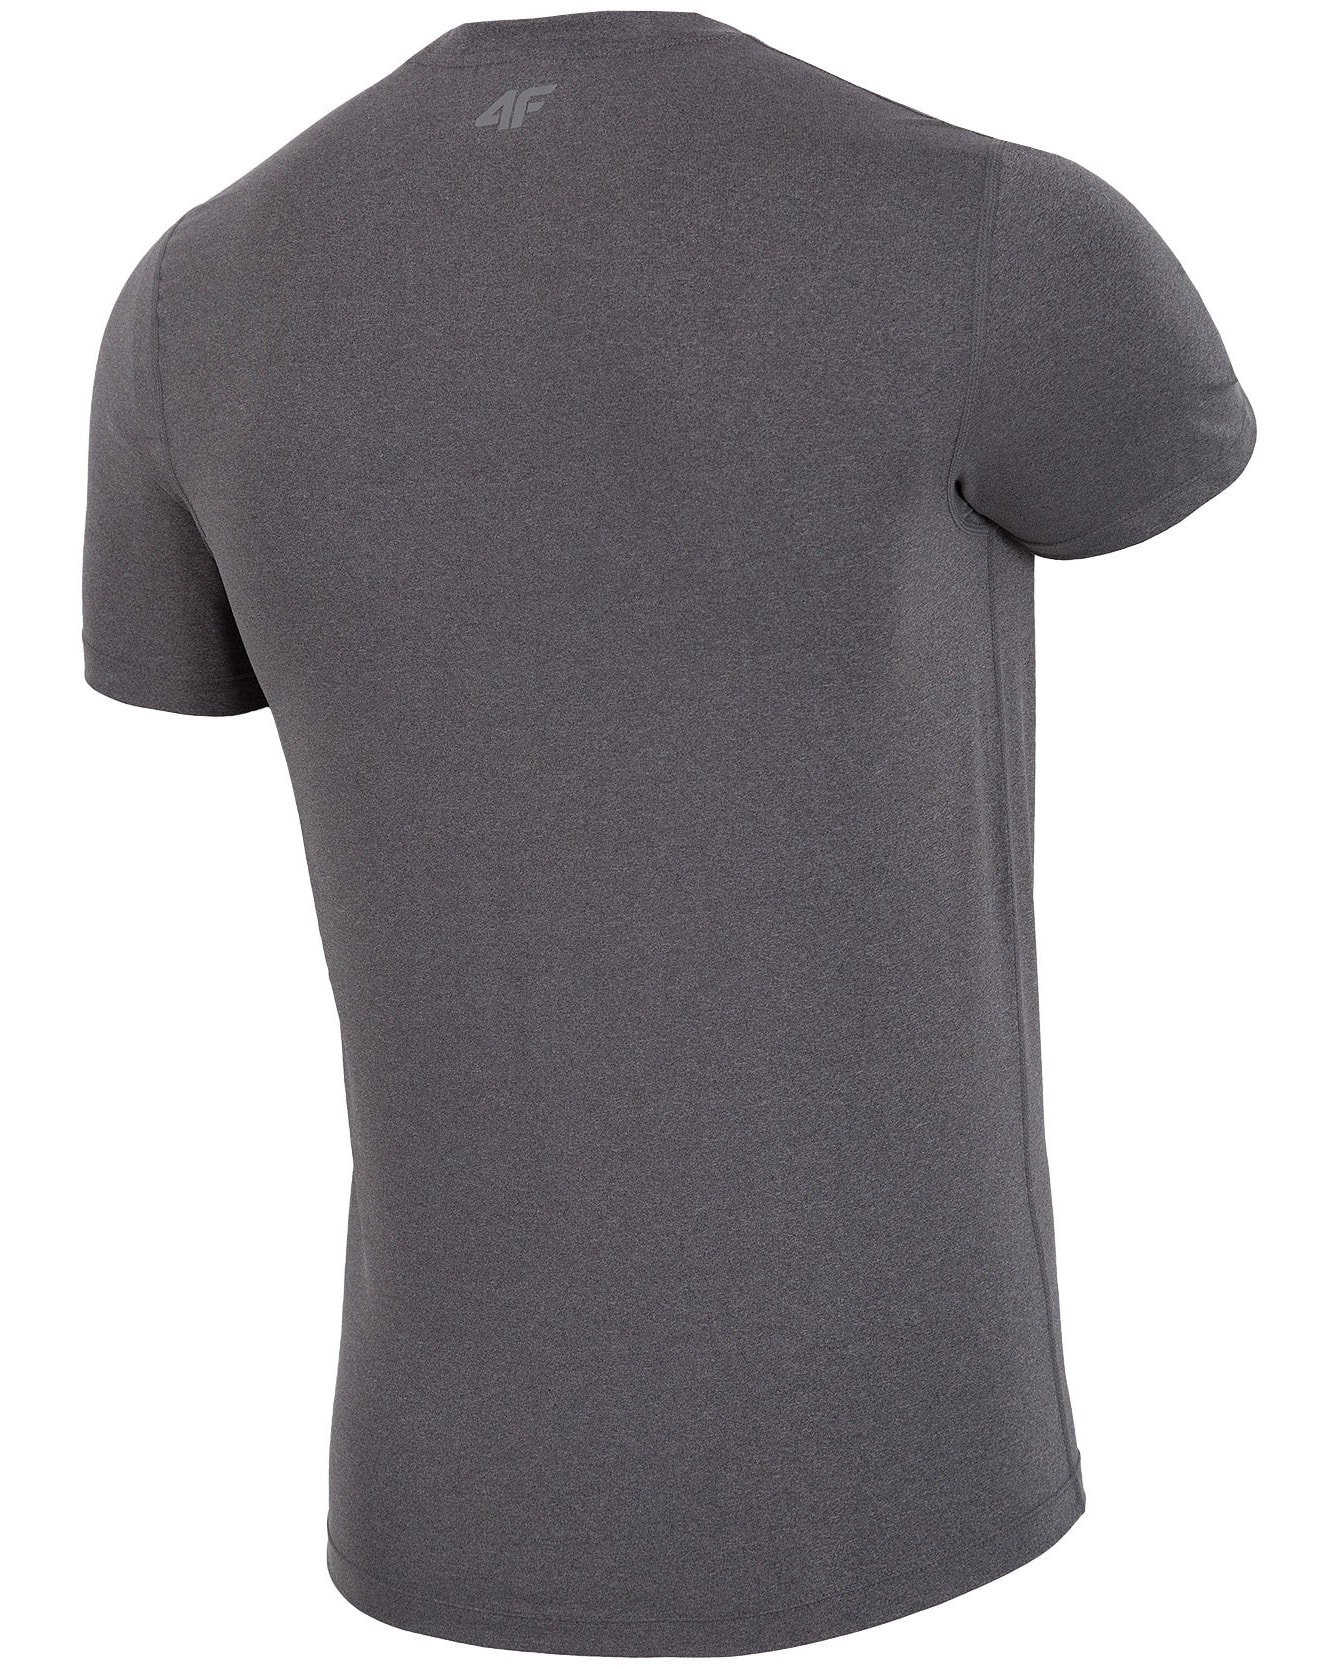 4F Man’s Functional T-shirt - Dark Grey Melange